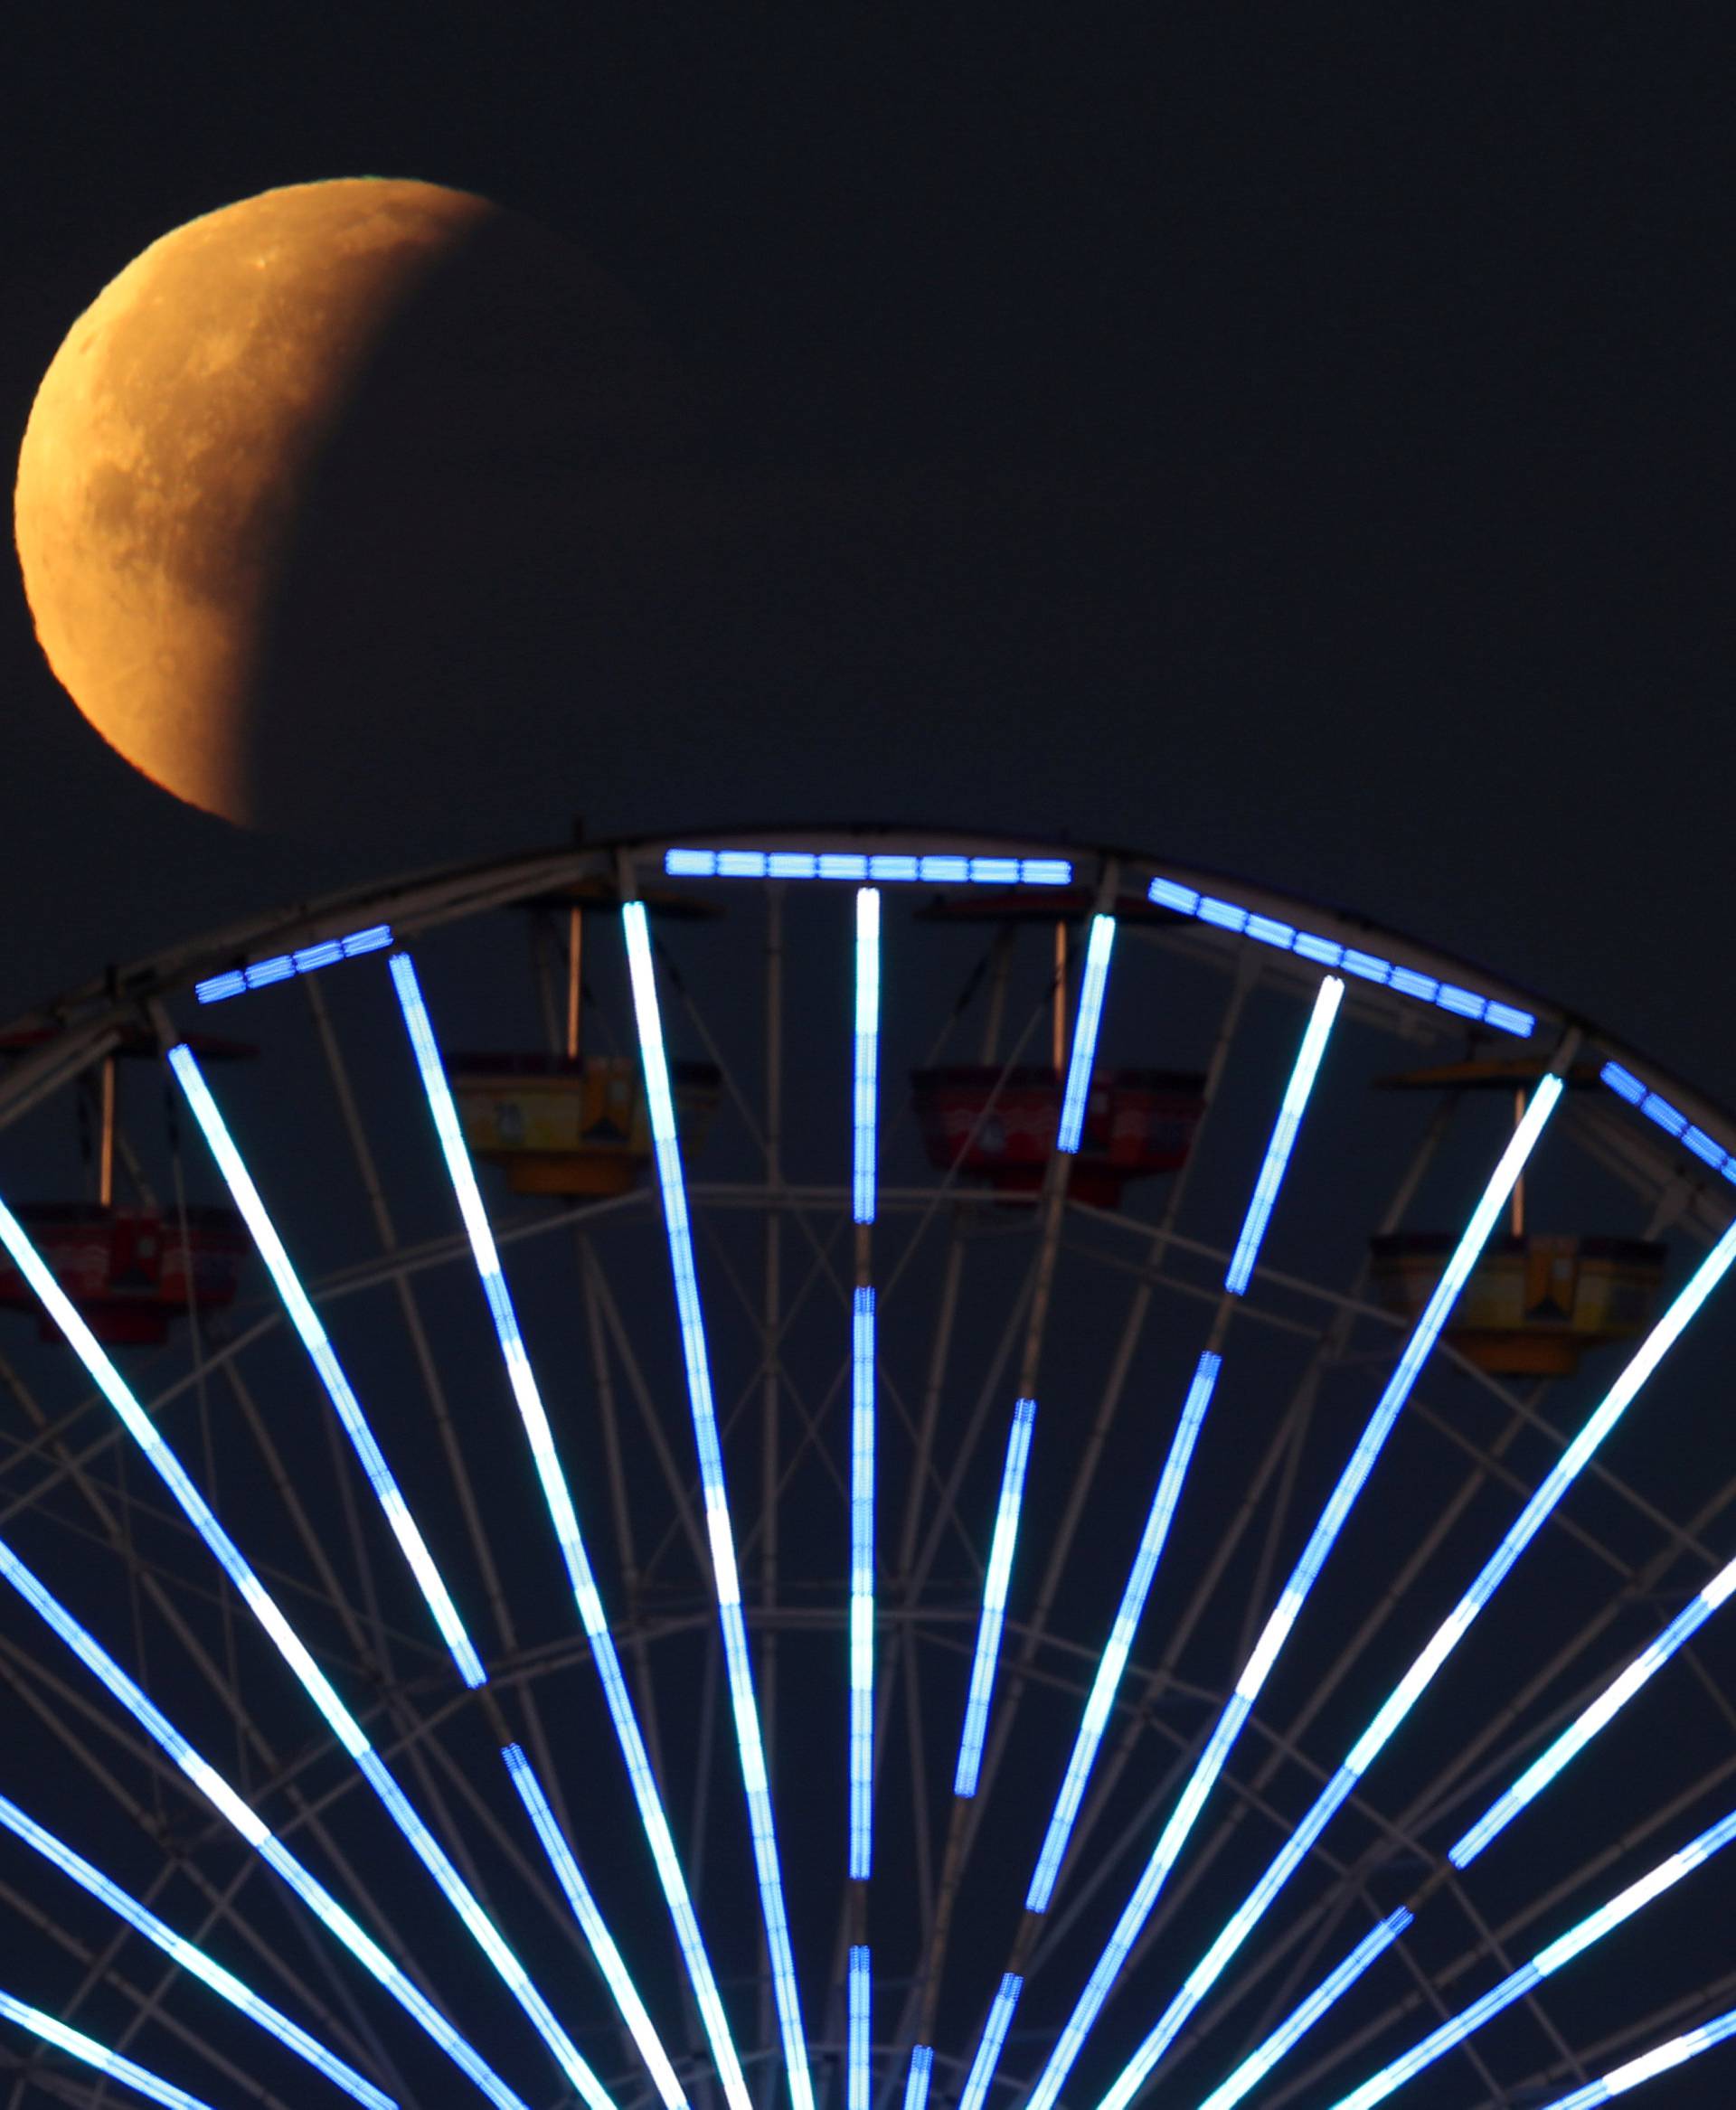 A lunar eclipse of a full "Blue Moon" is seen above the ferris wheel on the Santa Monica Pier in Santa Monica